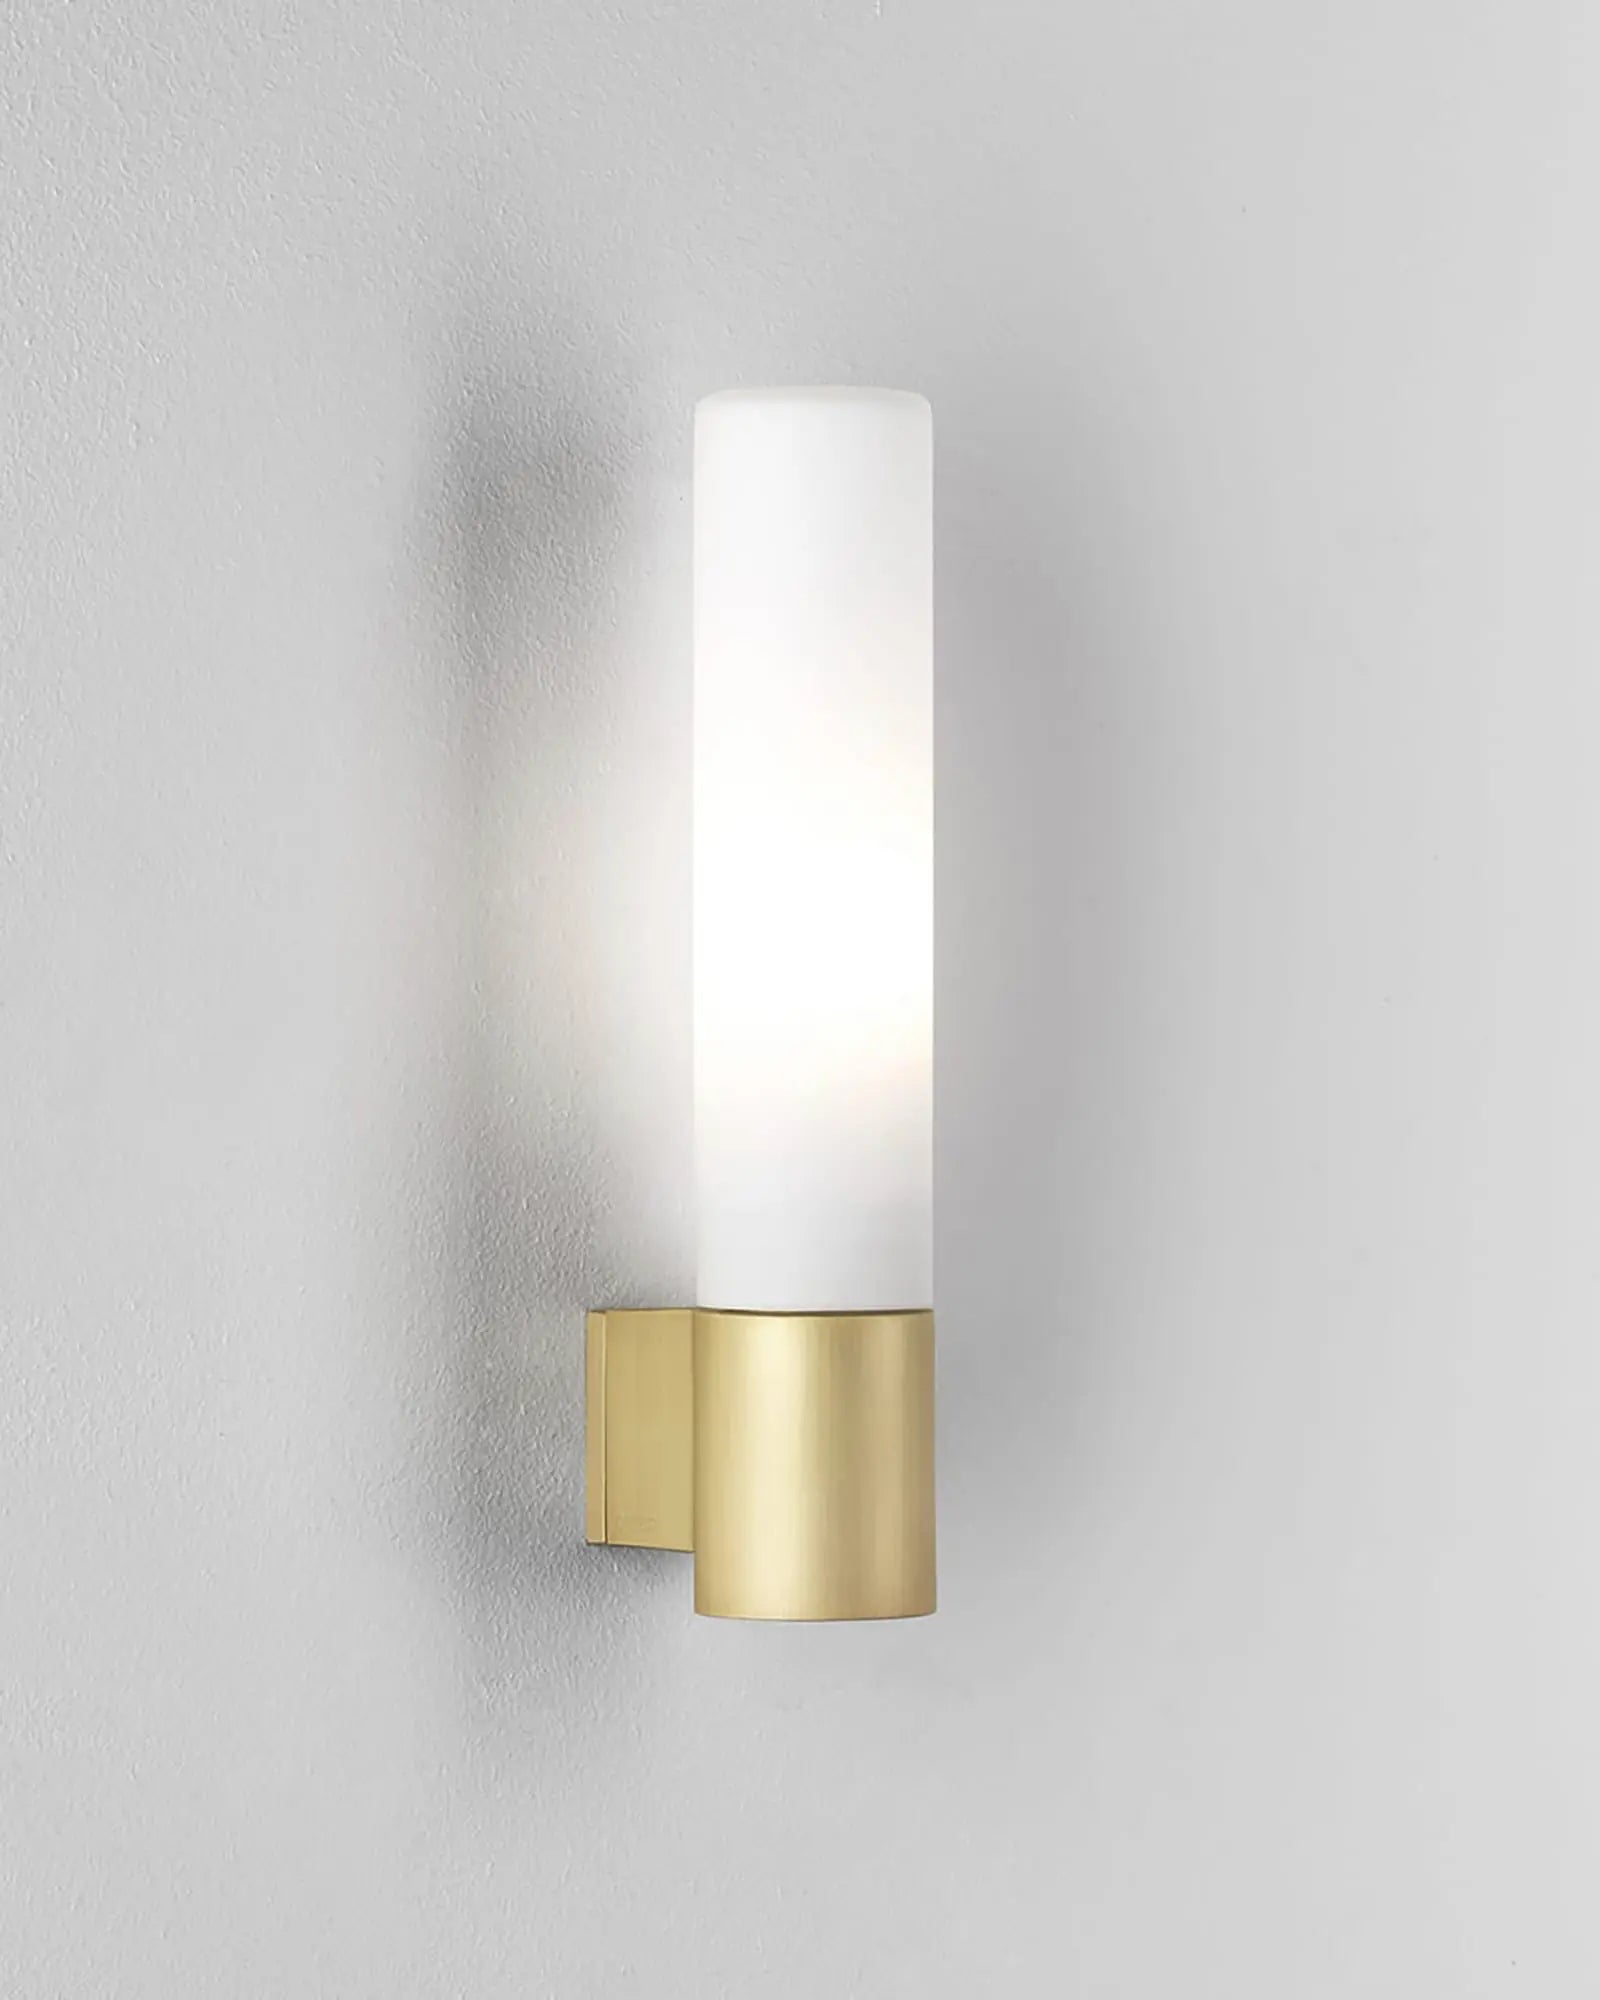 Bari contemporary lantern style bathroom wall lamp matte gold